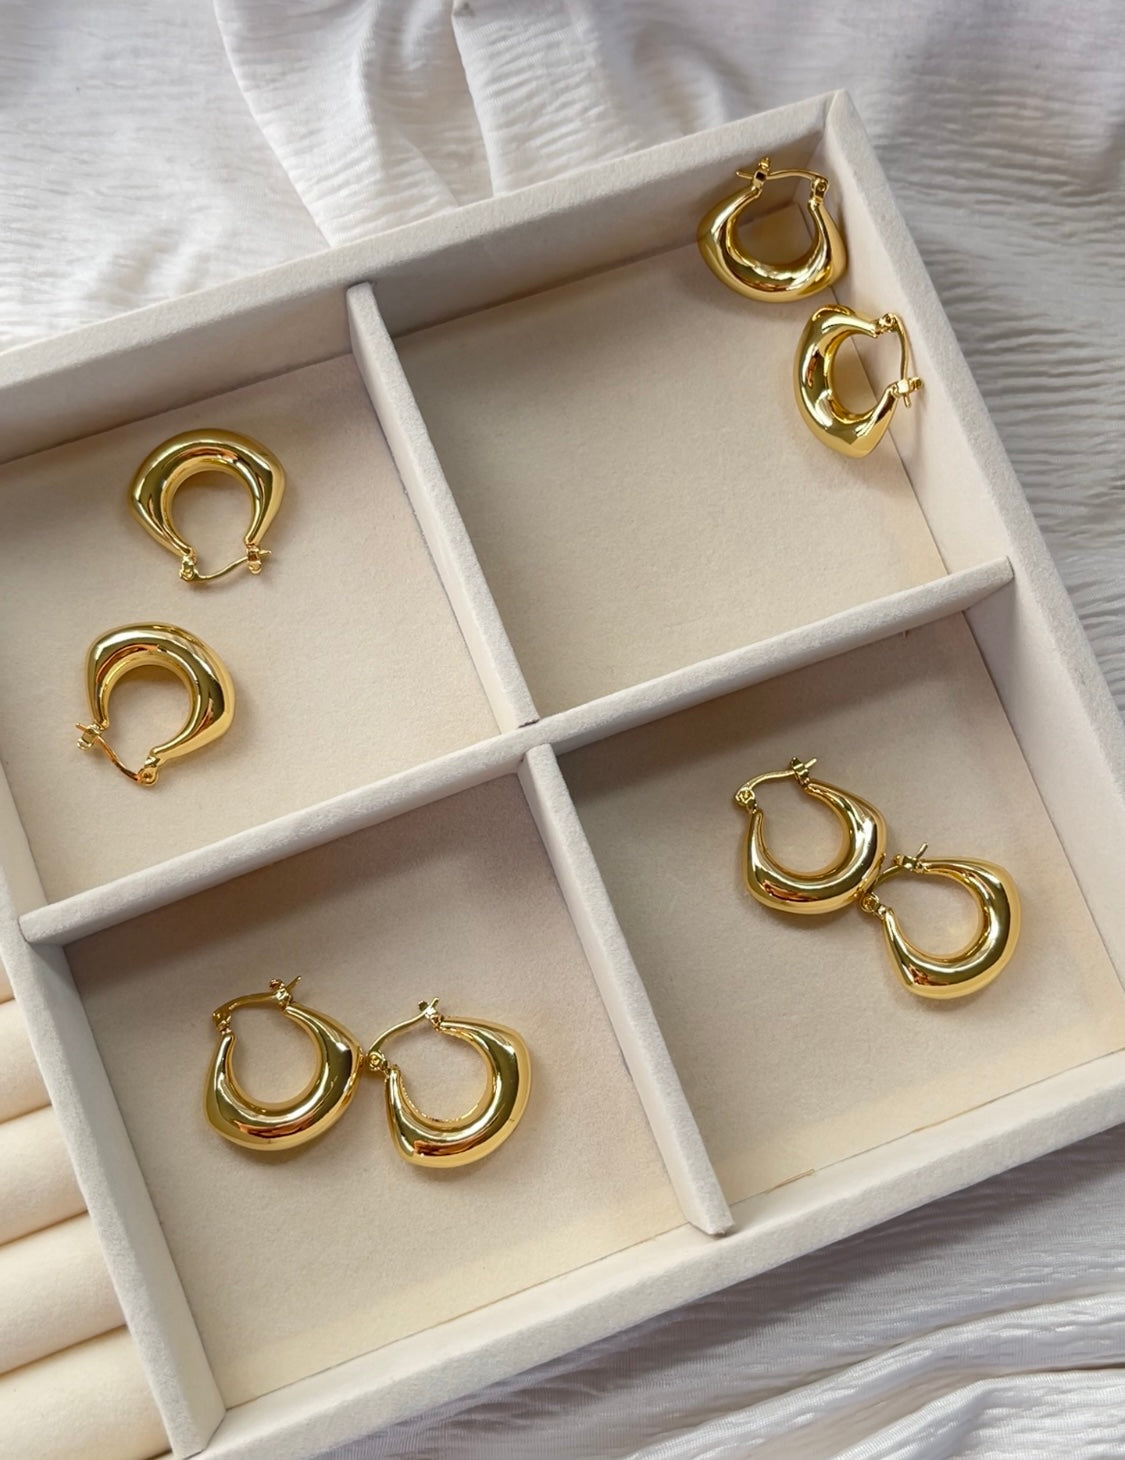 Gypsy Hoop Earrings in Solid Gold - Chunky Gold Hoops